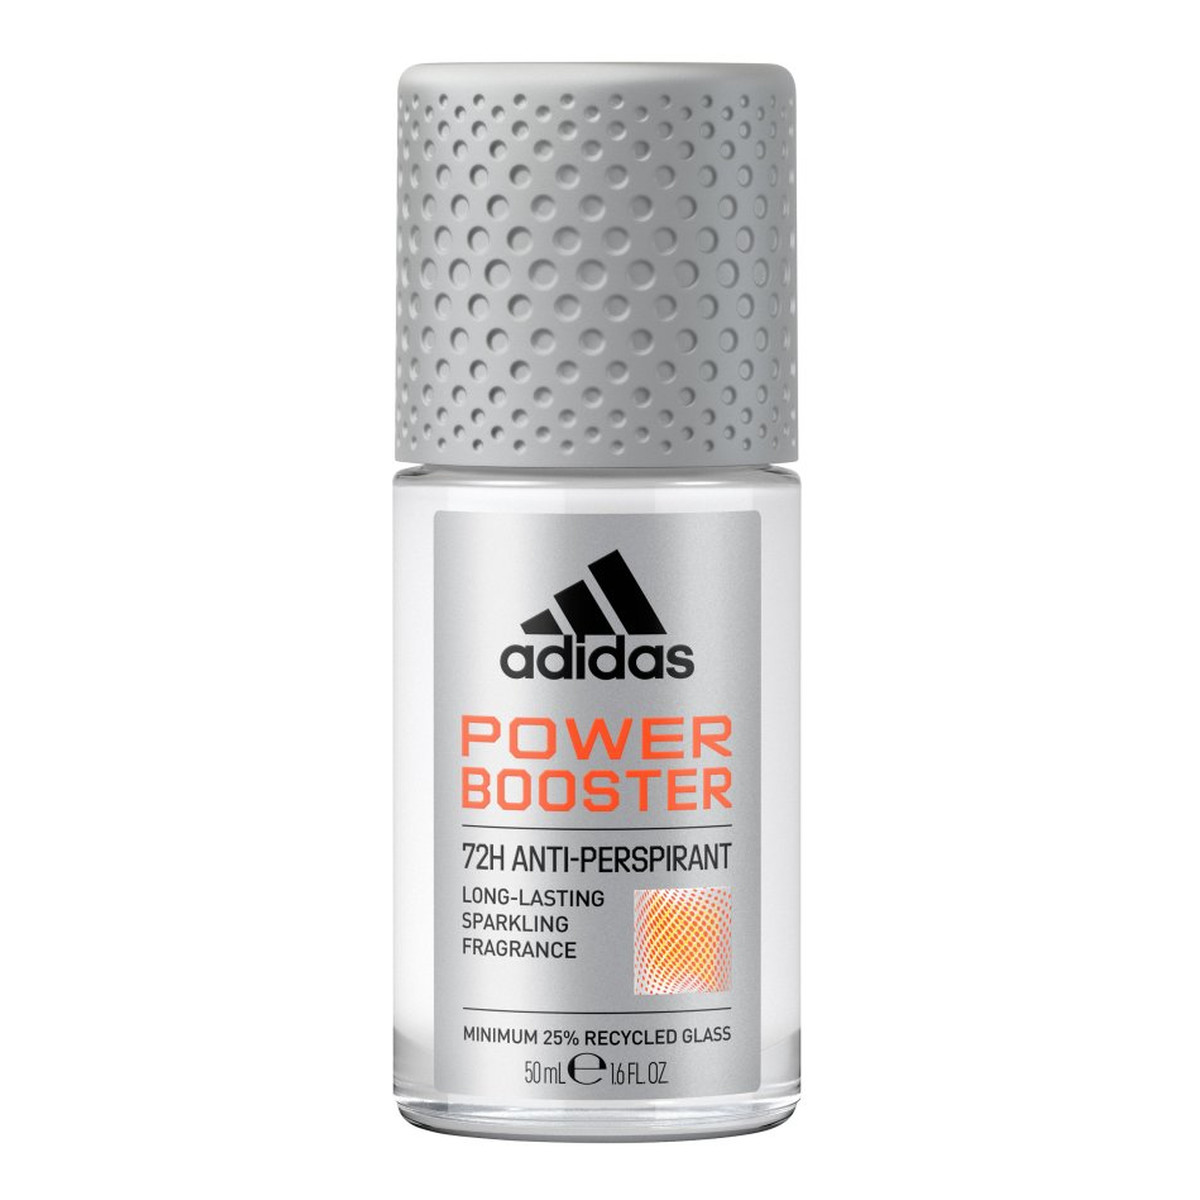 Adidas Power Booster Antyperspirant 72H 50ml